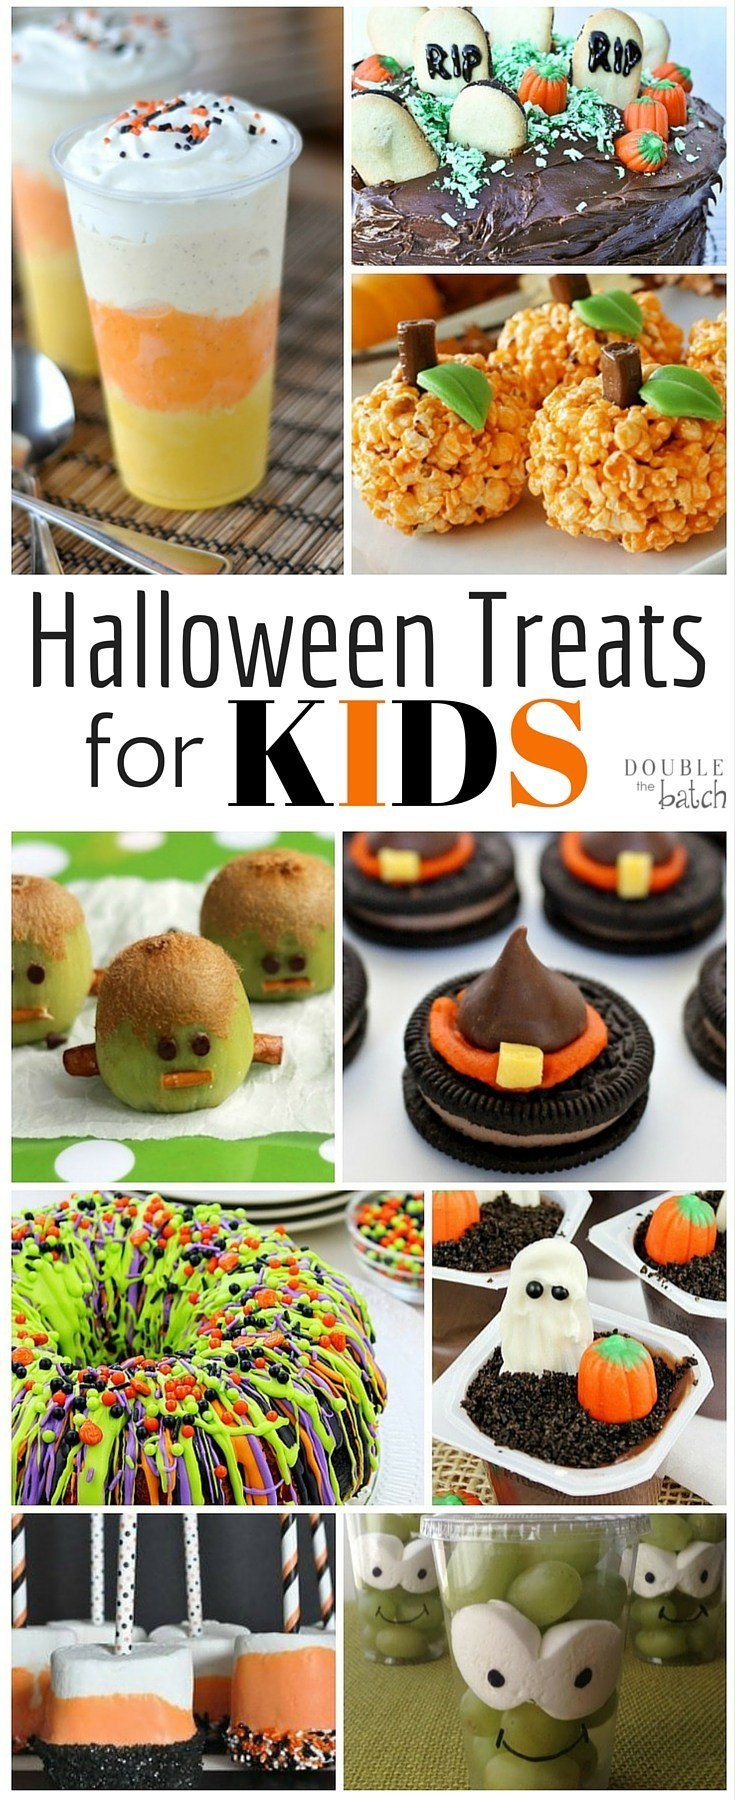 Fun Halloween Desserts
 Fun Halloween Treats for Kids Double the Batch